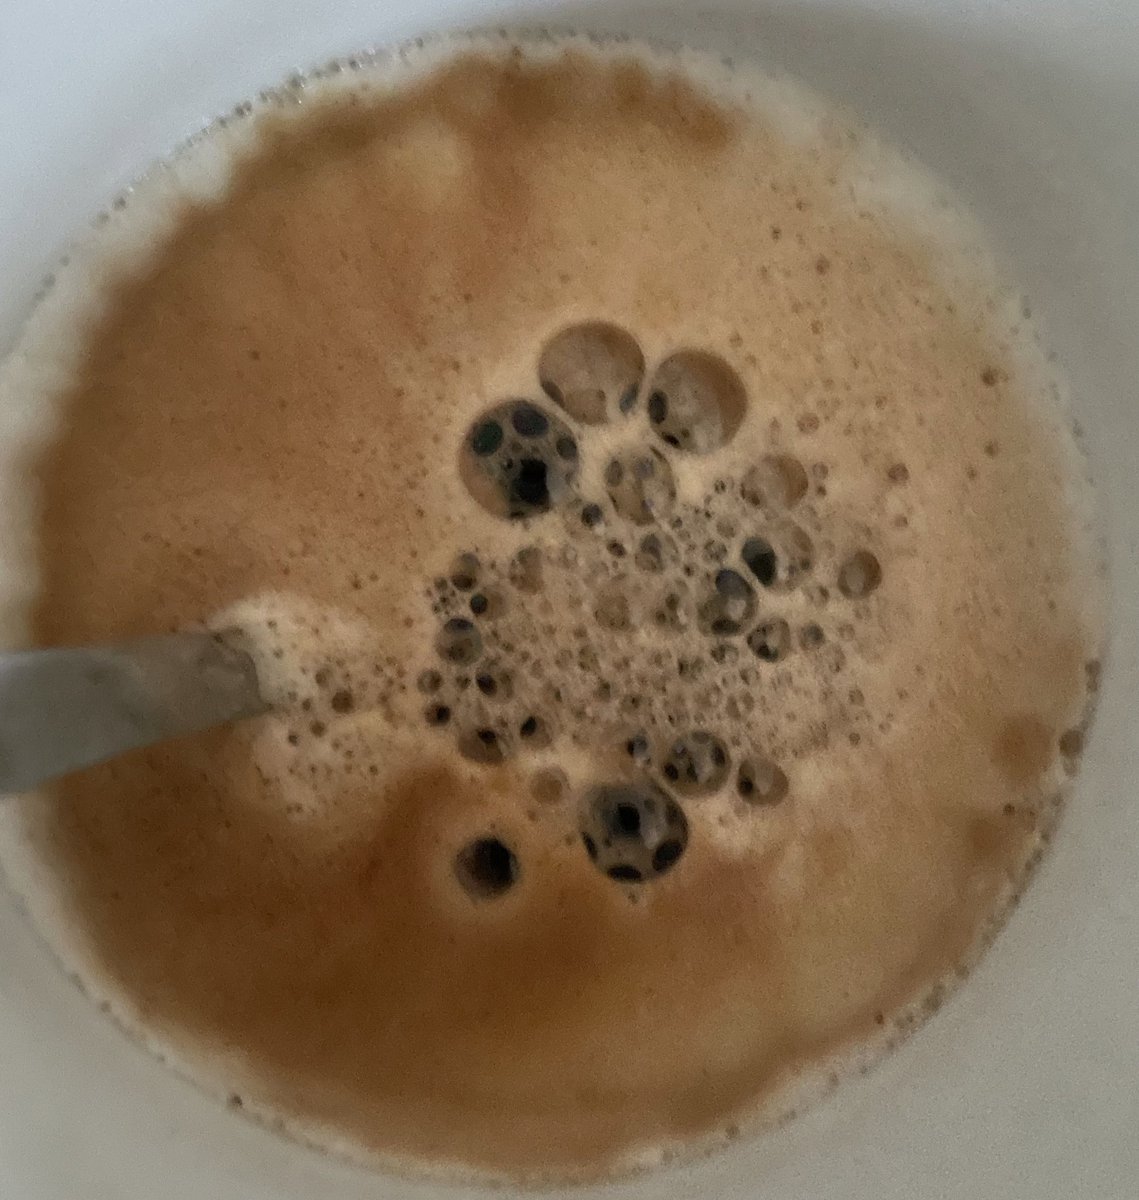 #Blastocystis like coffee ☕️! Good morning 🌅